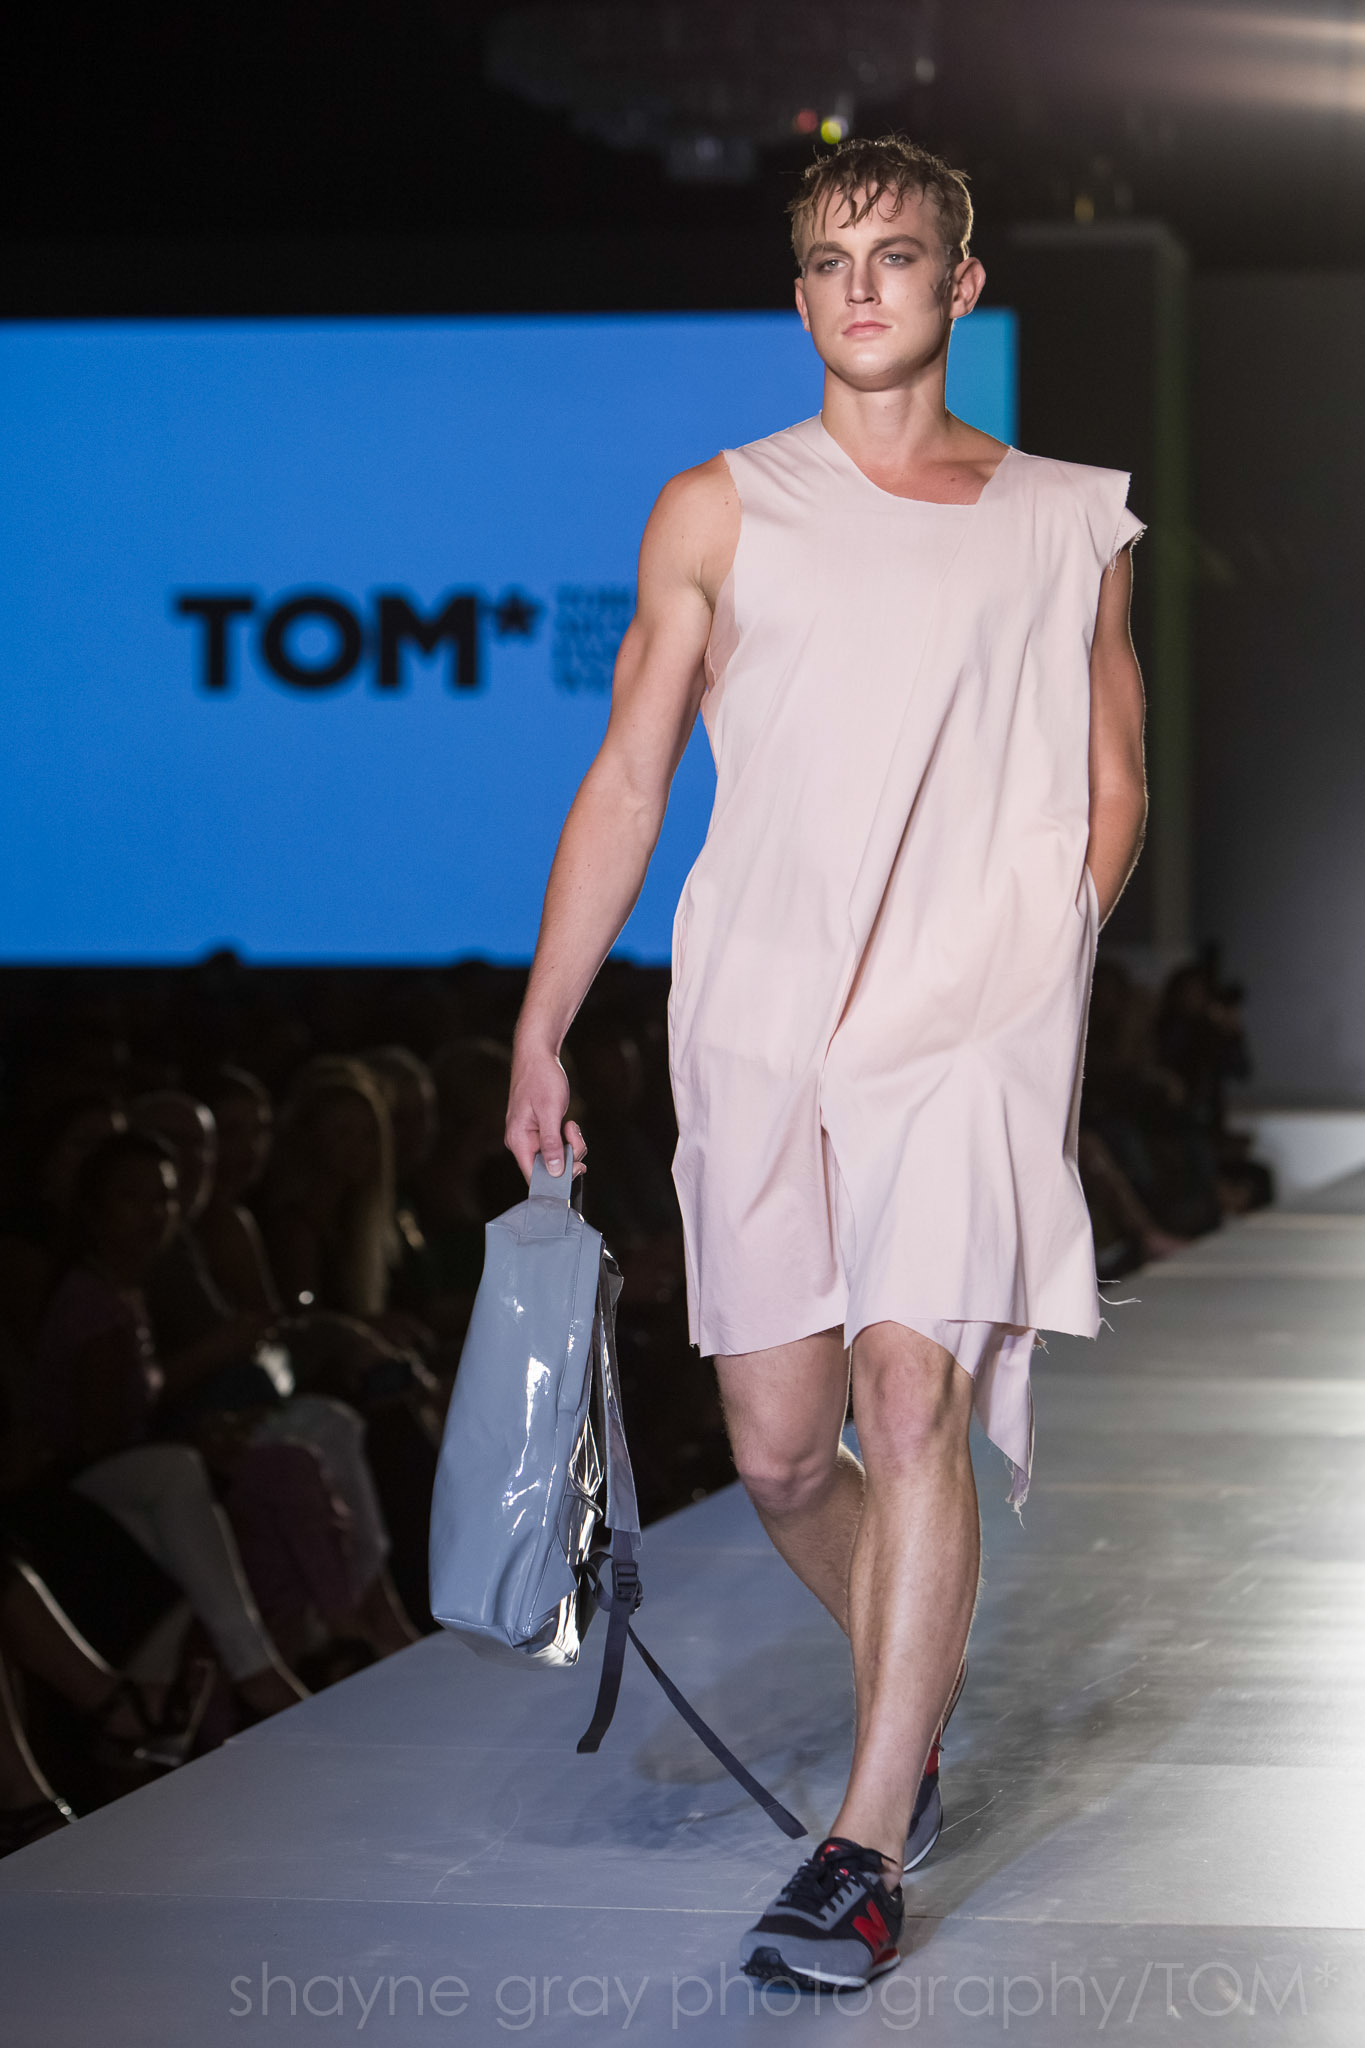 Shayne-Gray-Toronto-men's-fashion_week-TOM-Pedram-Karimi-8877.jpg